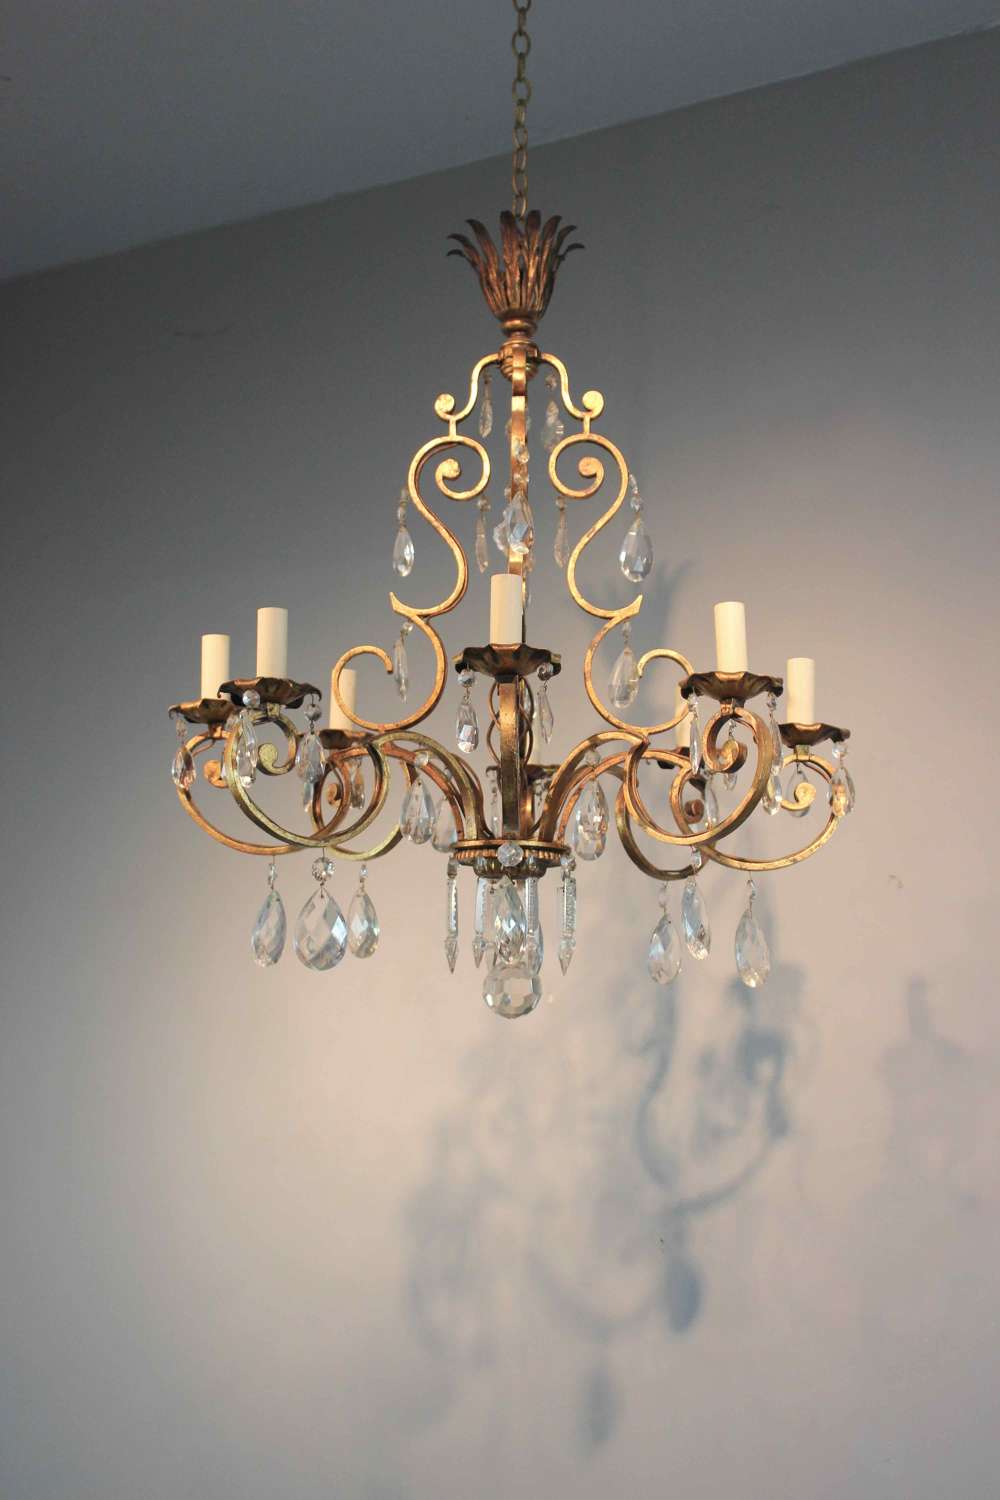 Well balanced gilt metal and cut glass chandelier